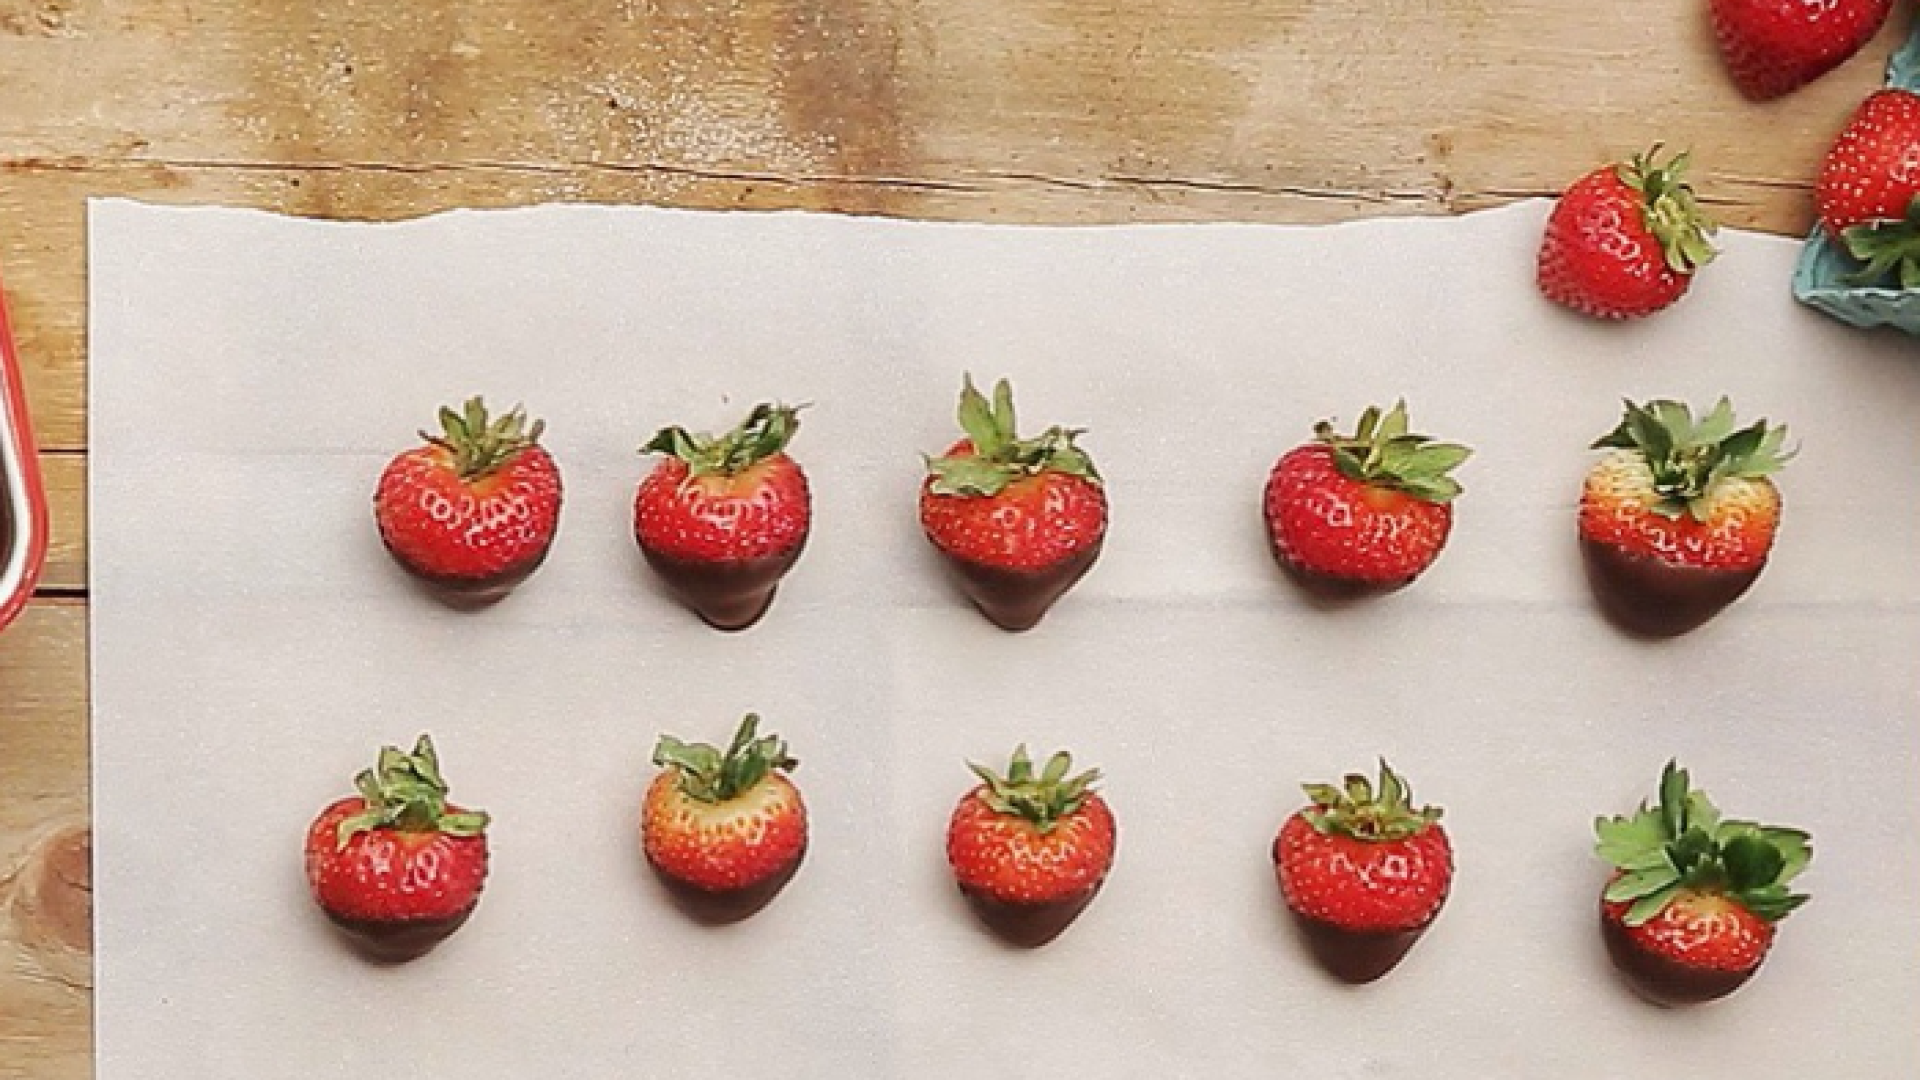 Strawberries on wax paper